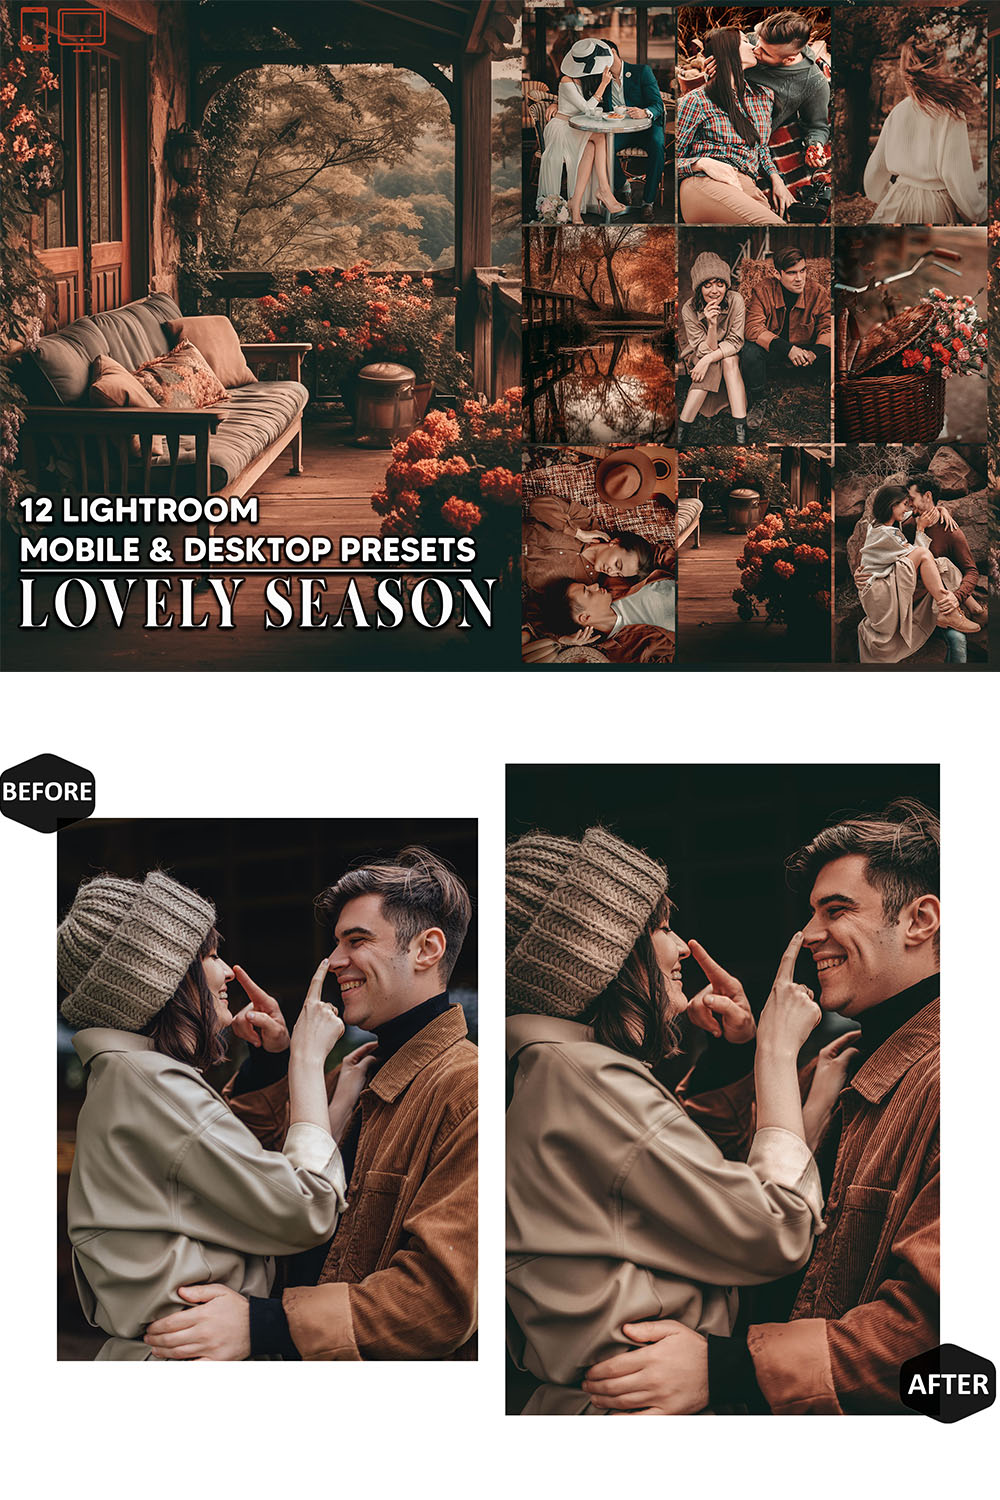 12 Lovely Season Lightroom Presets, Couple Wedding Mobile Preset, Moody Desktop LR Filter Lifestyle Theme For Blogger Portrait Instagram pinterest preview image.